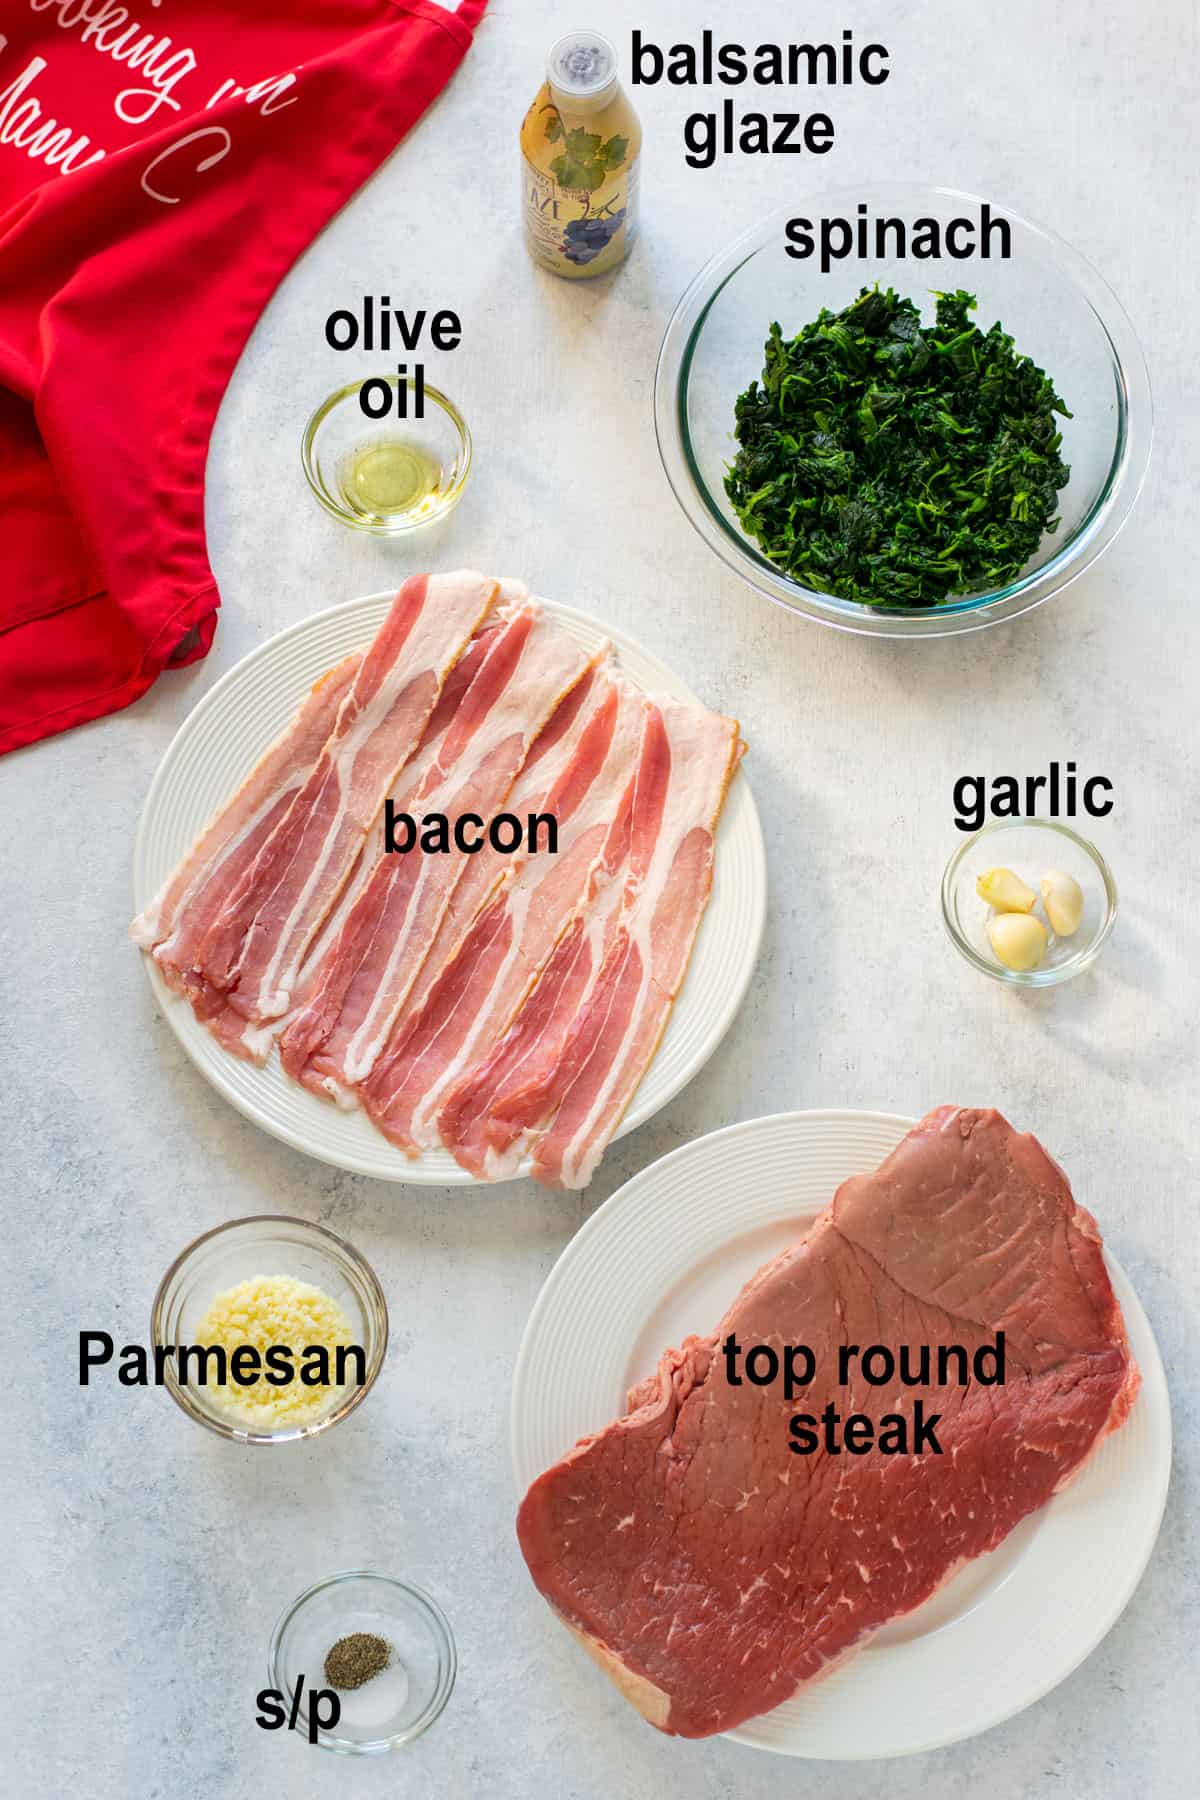 steak, spinach, bacon, Parmesan, seasonings, balsamic glaze, garlic, oil